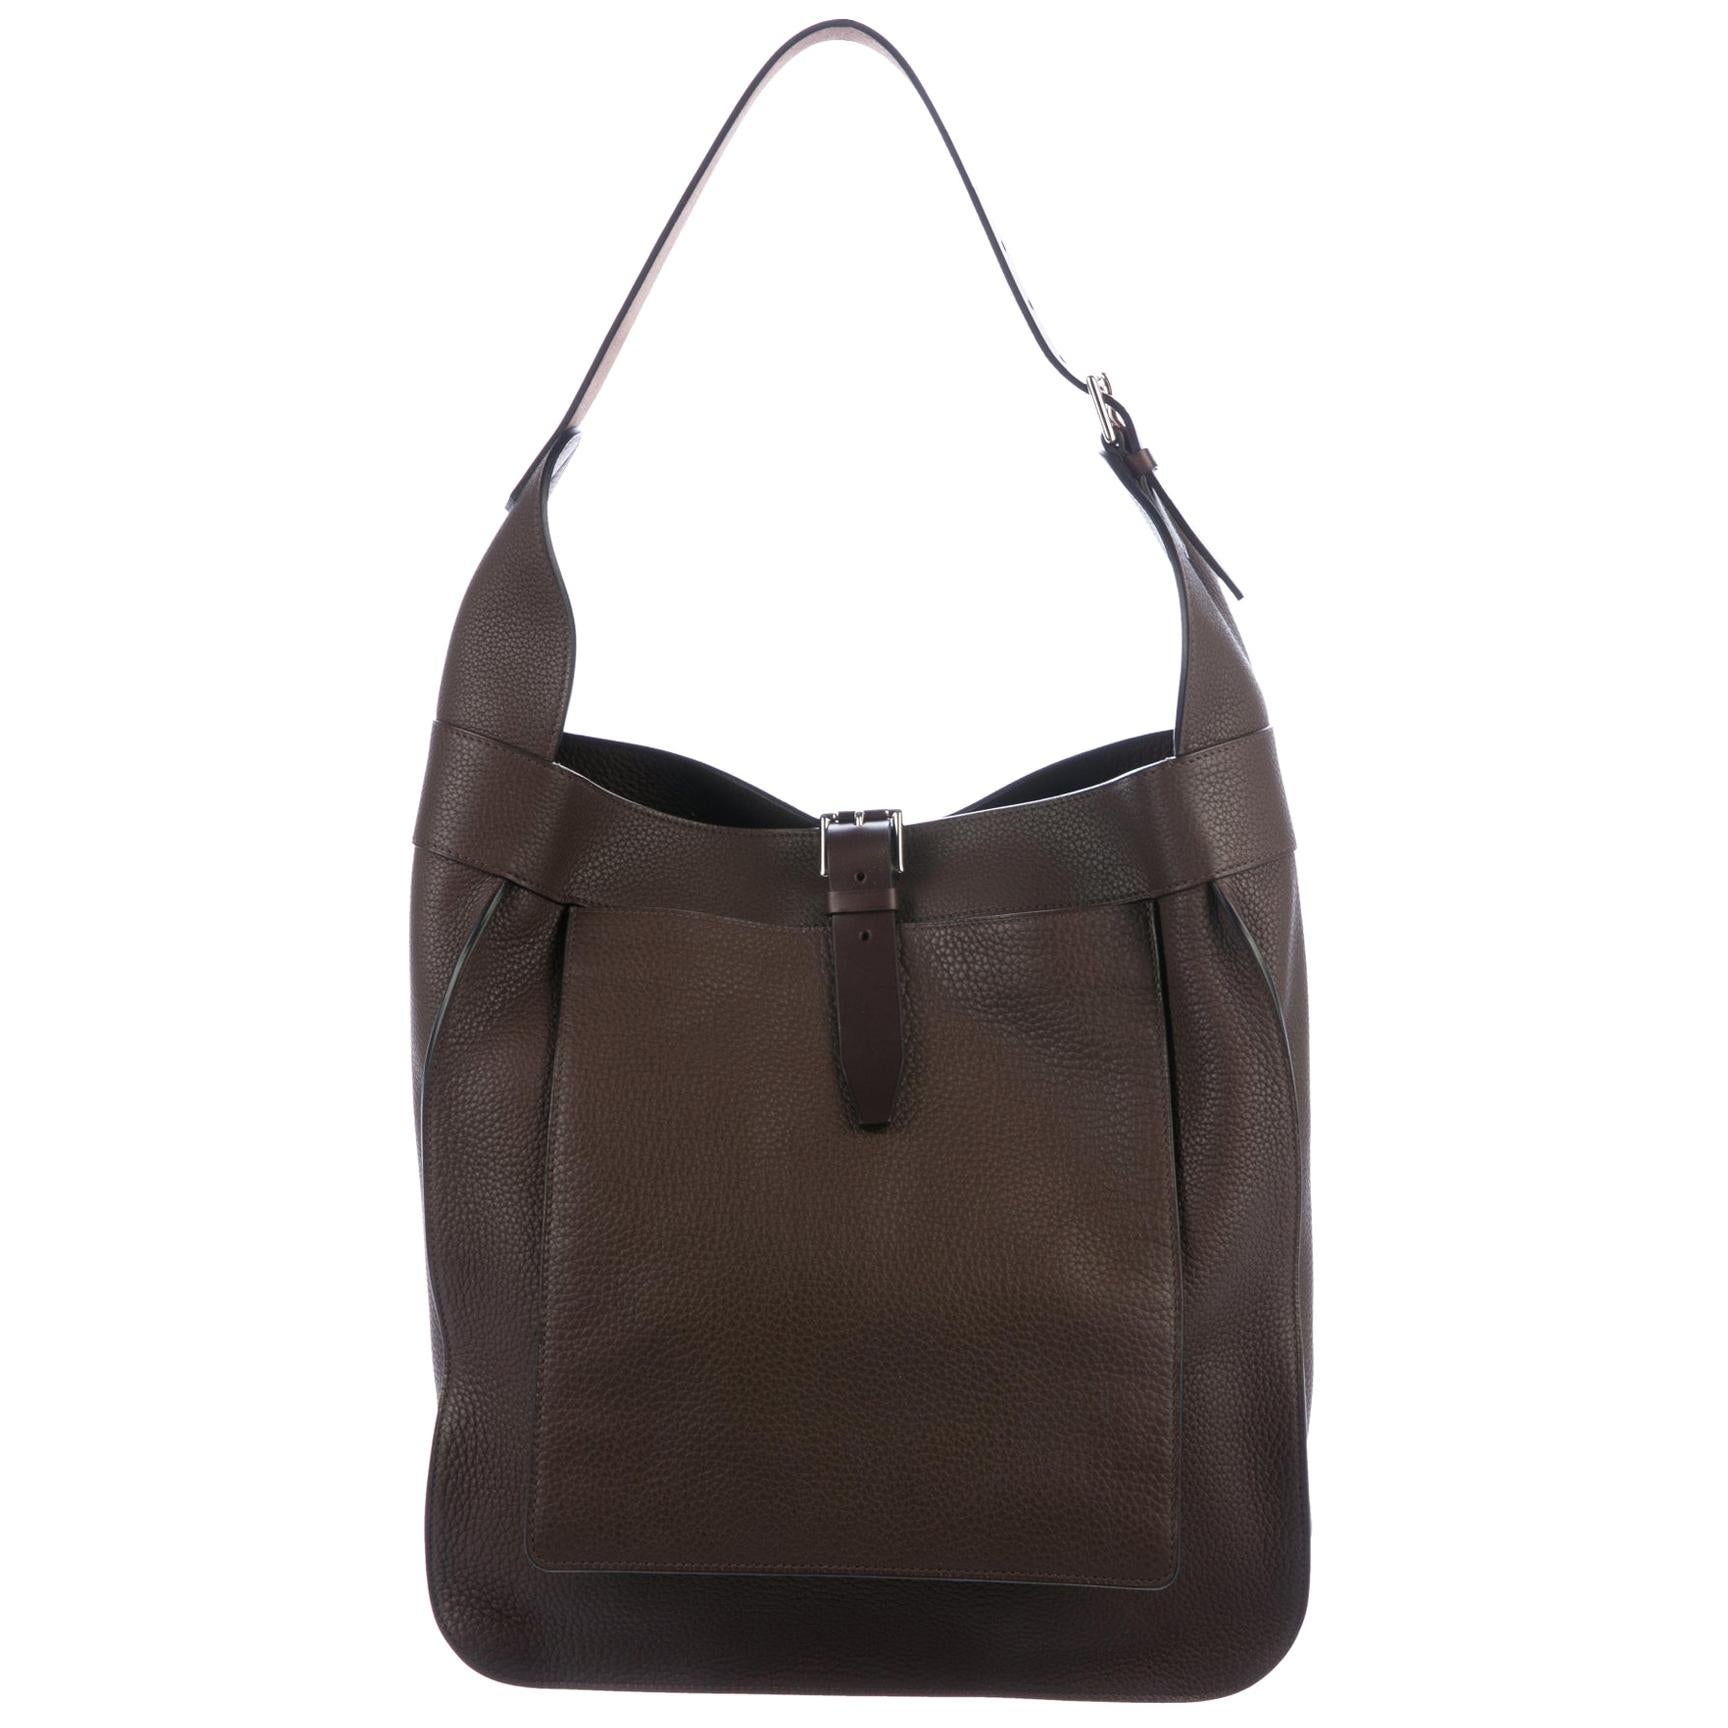 Hermes Dark Brown Leather Palladium Large Carryall Travel Tote Hobo Shoulder Bag